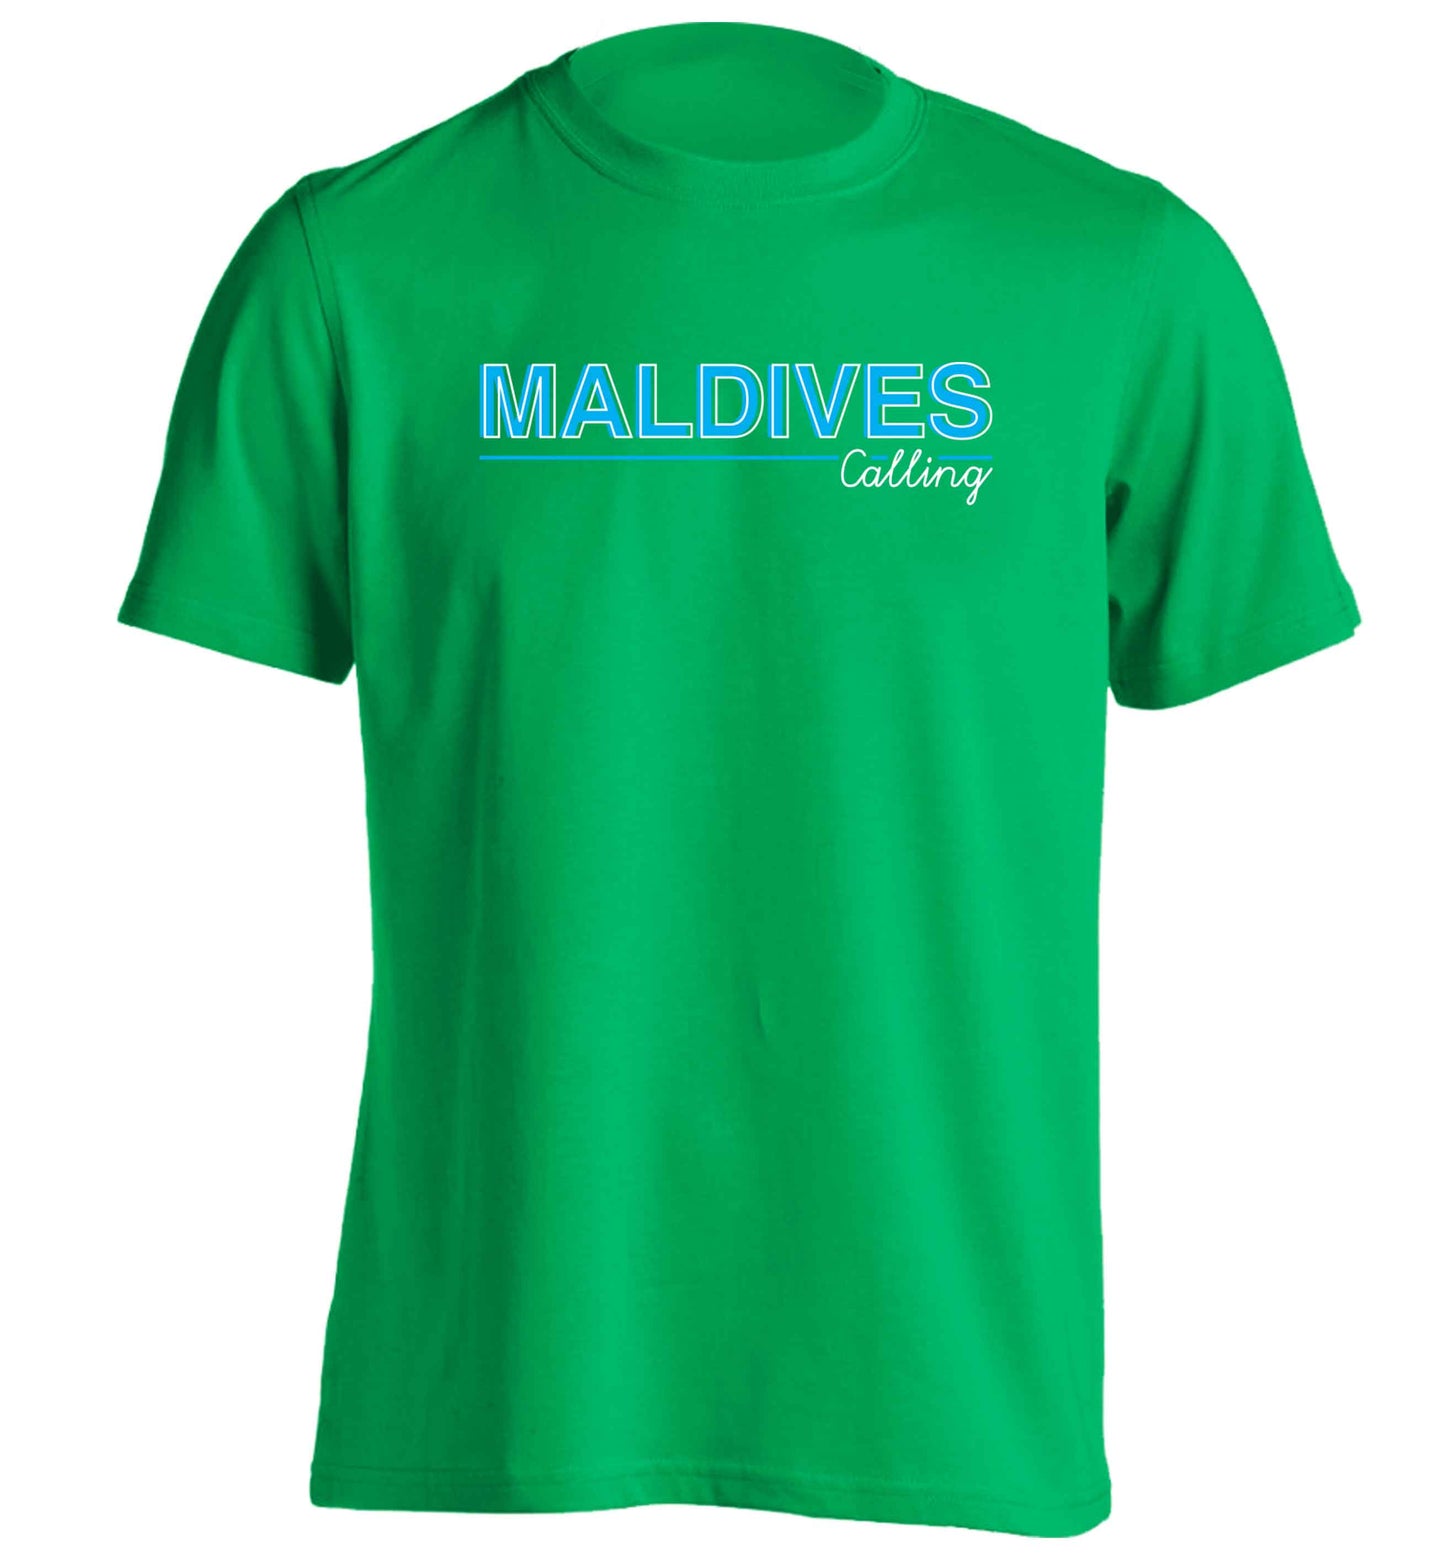 Maldives calling adults unisex green Tshirt 2XL